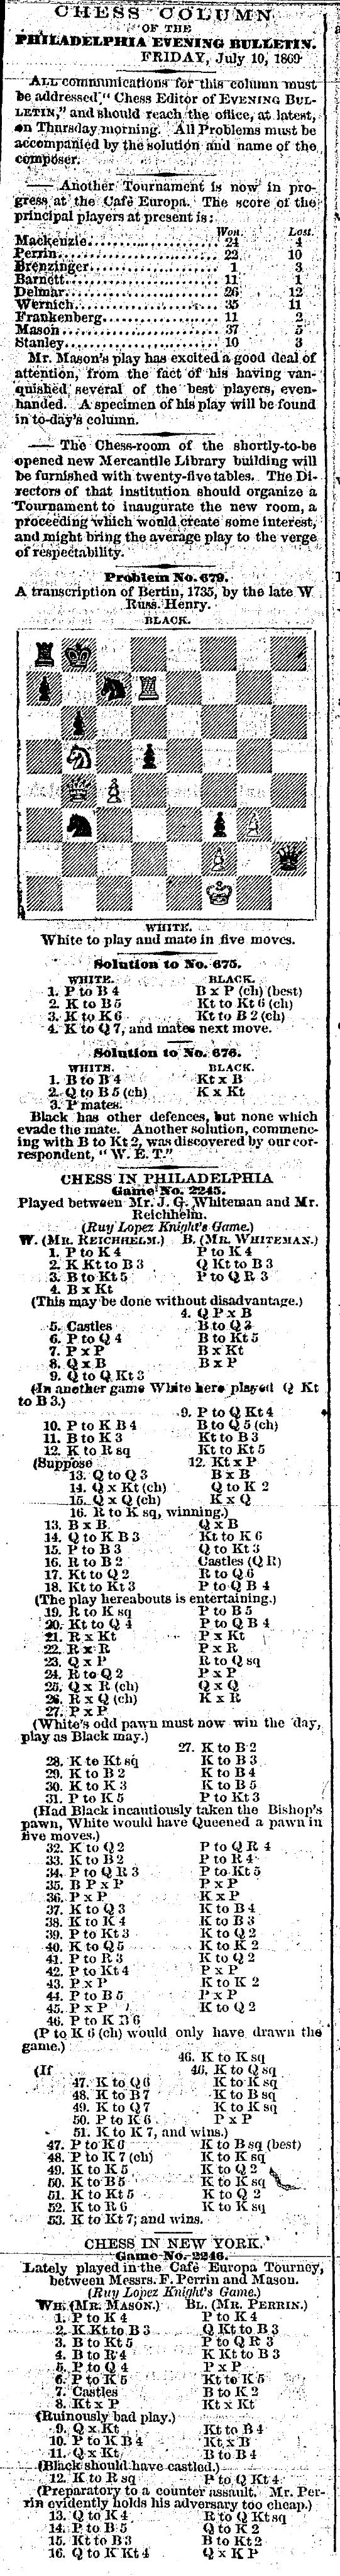 1869.07.09-01 Philadelphia Daily Evening Bulletin.jpg